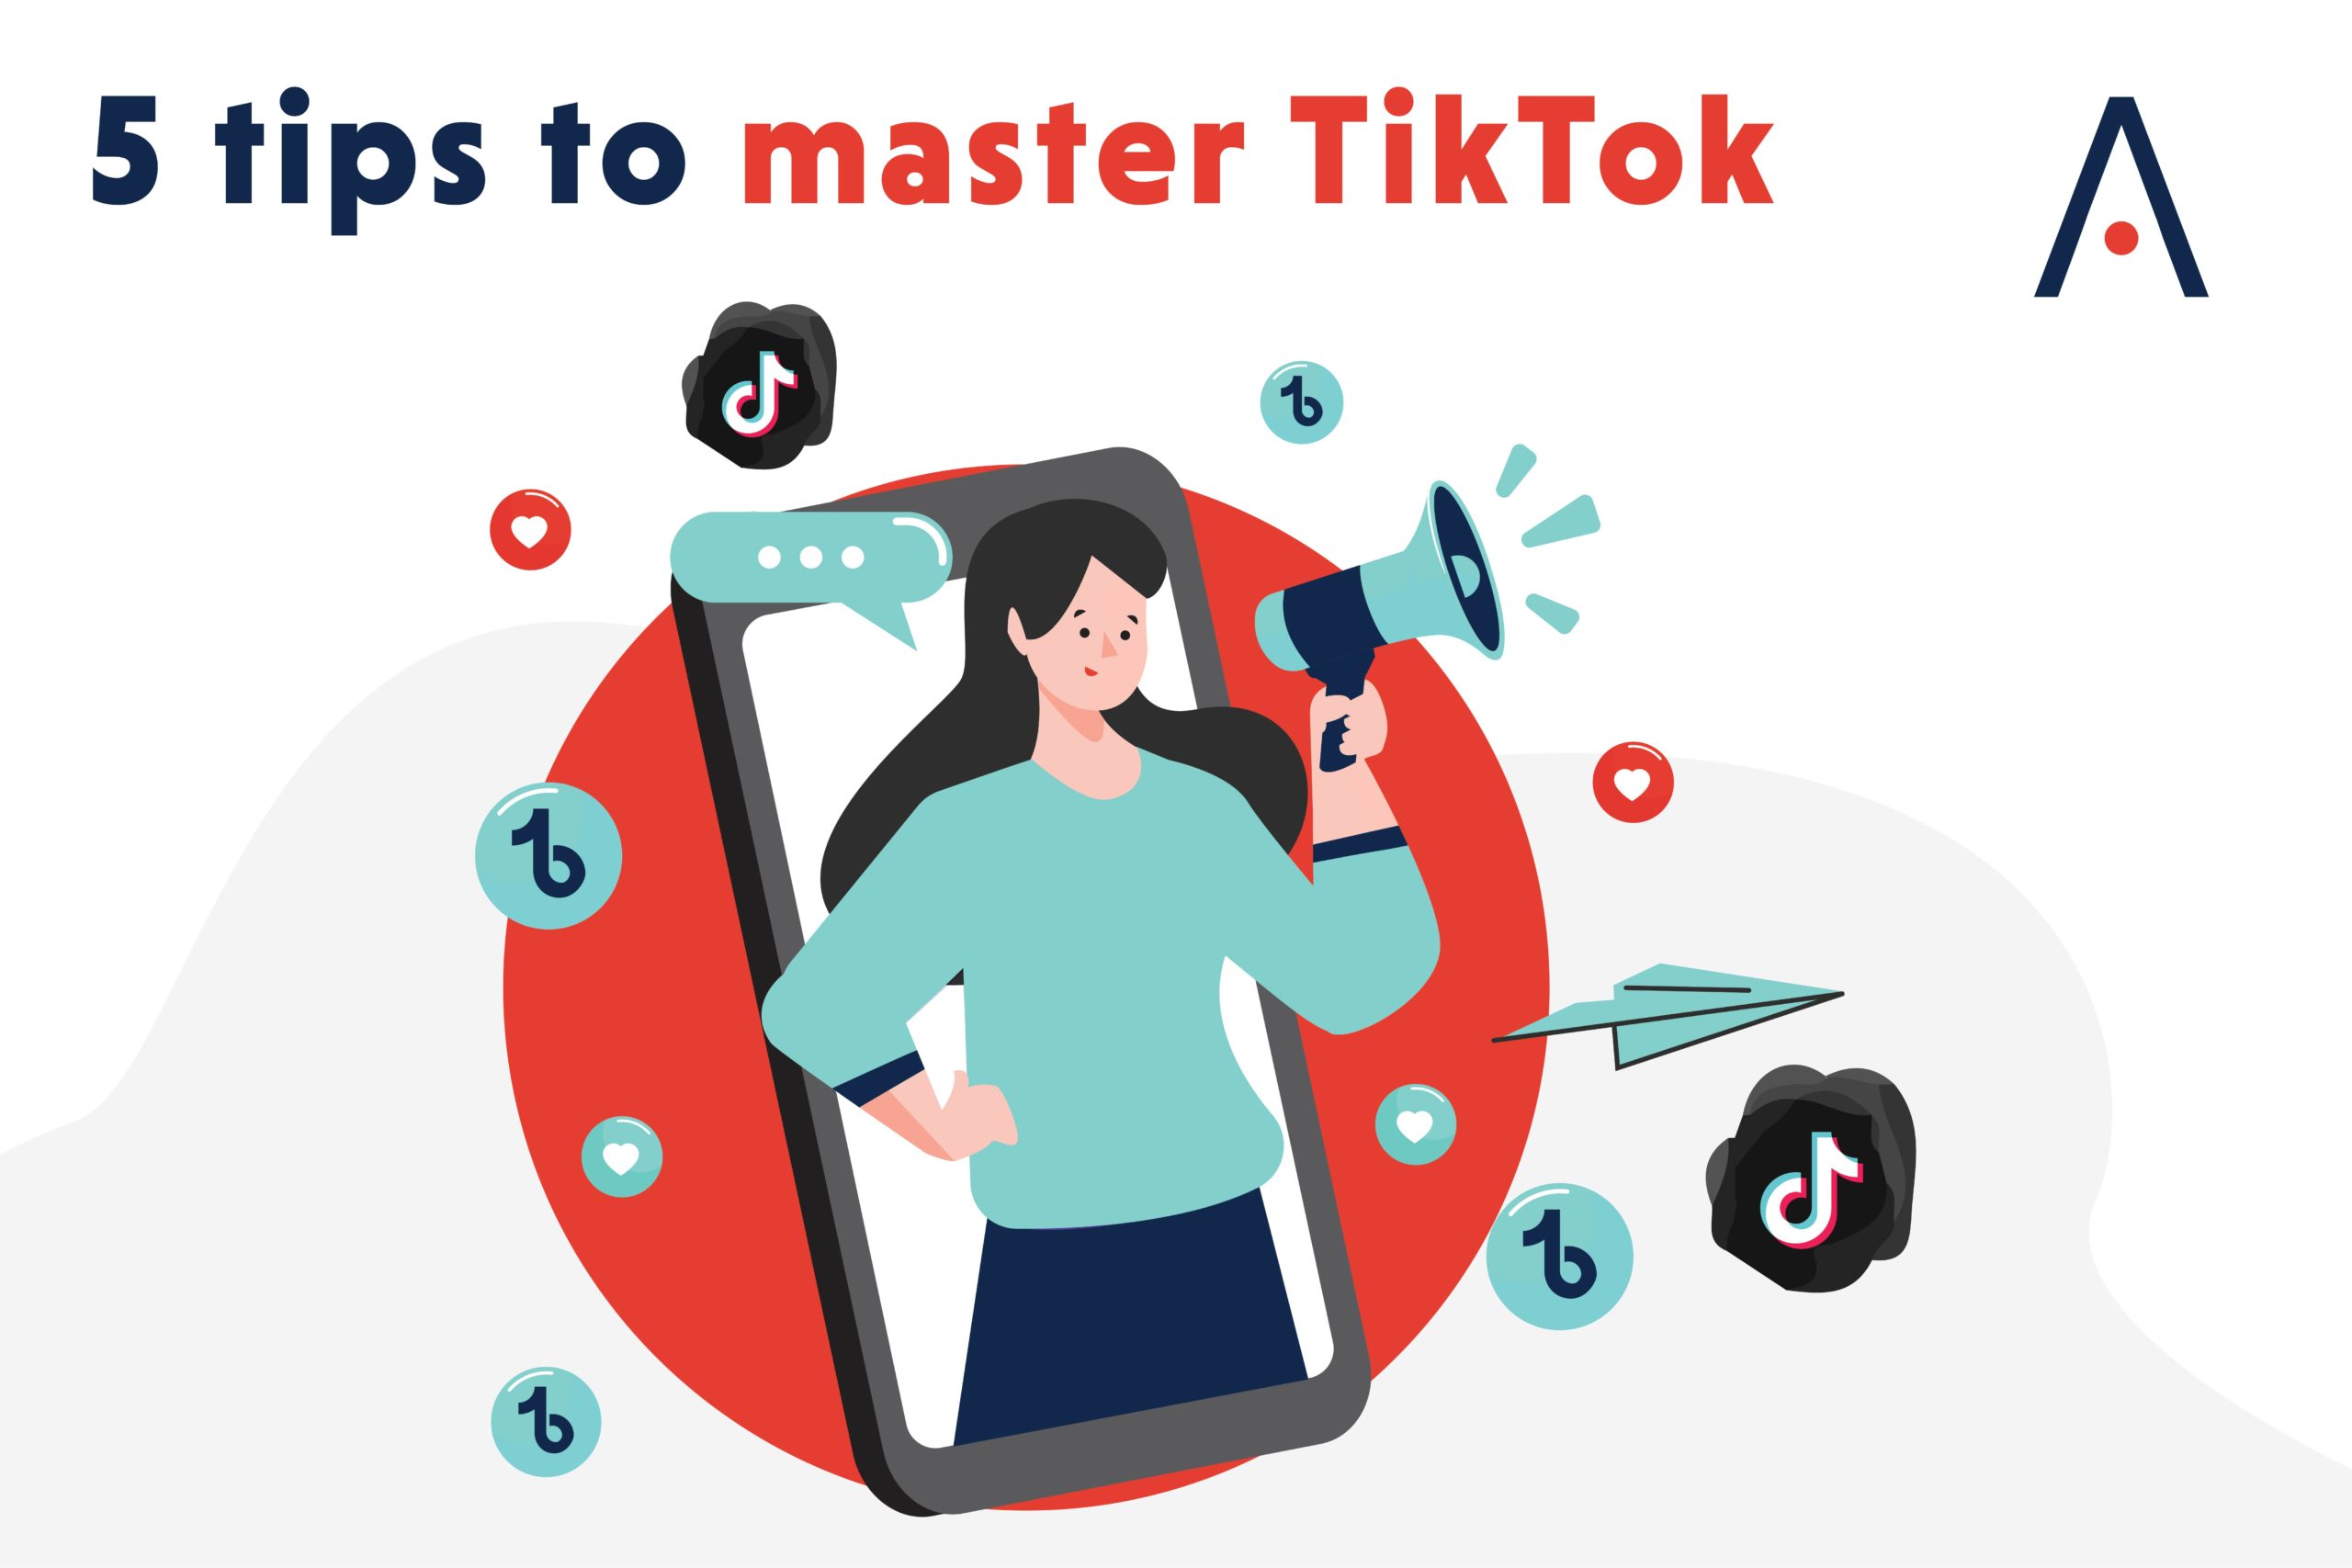 let’s talk about TikTok